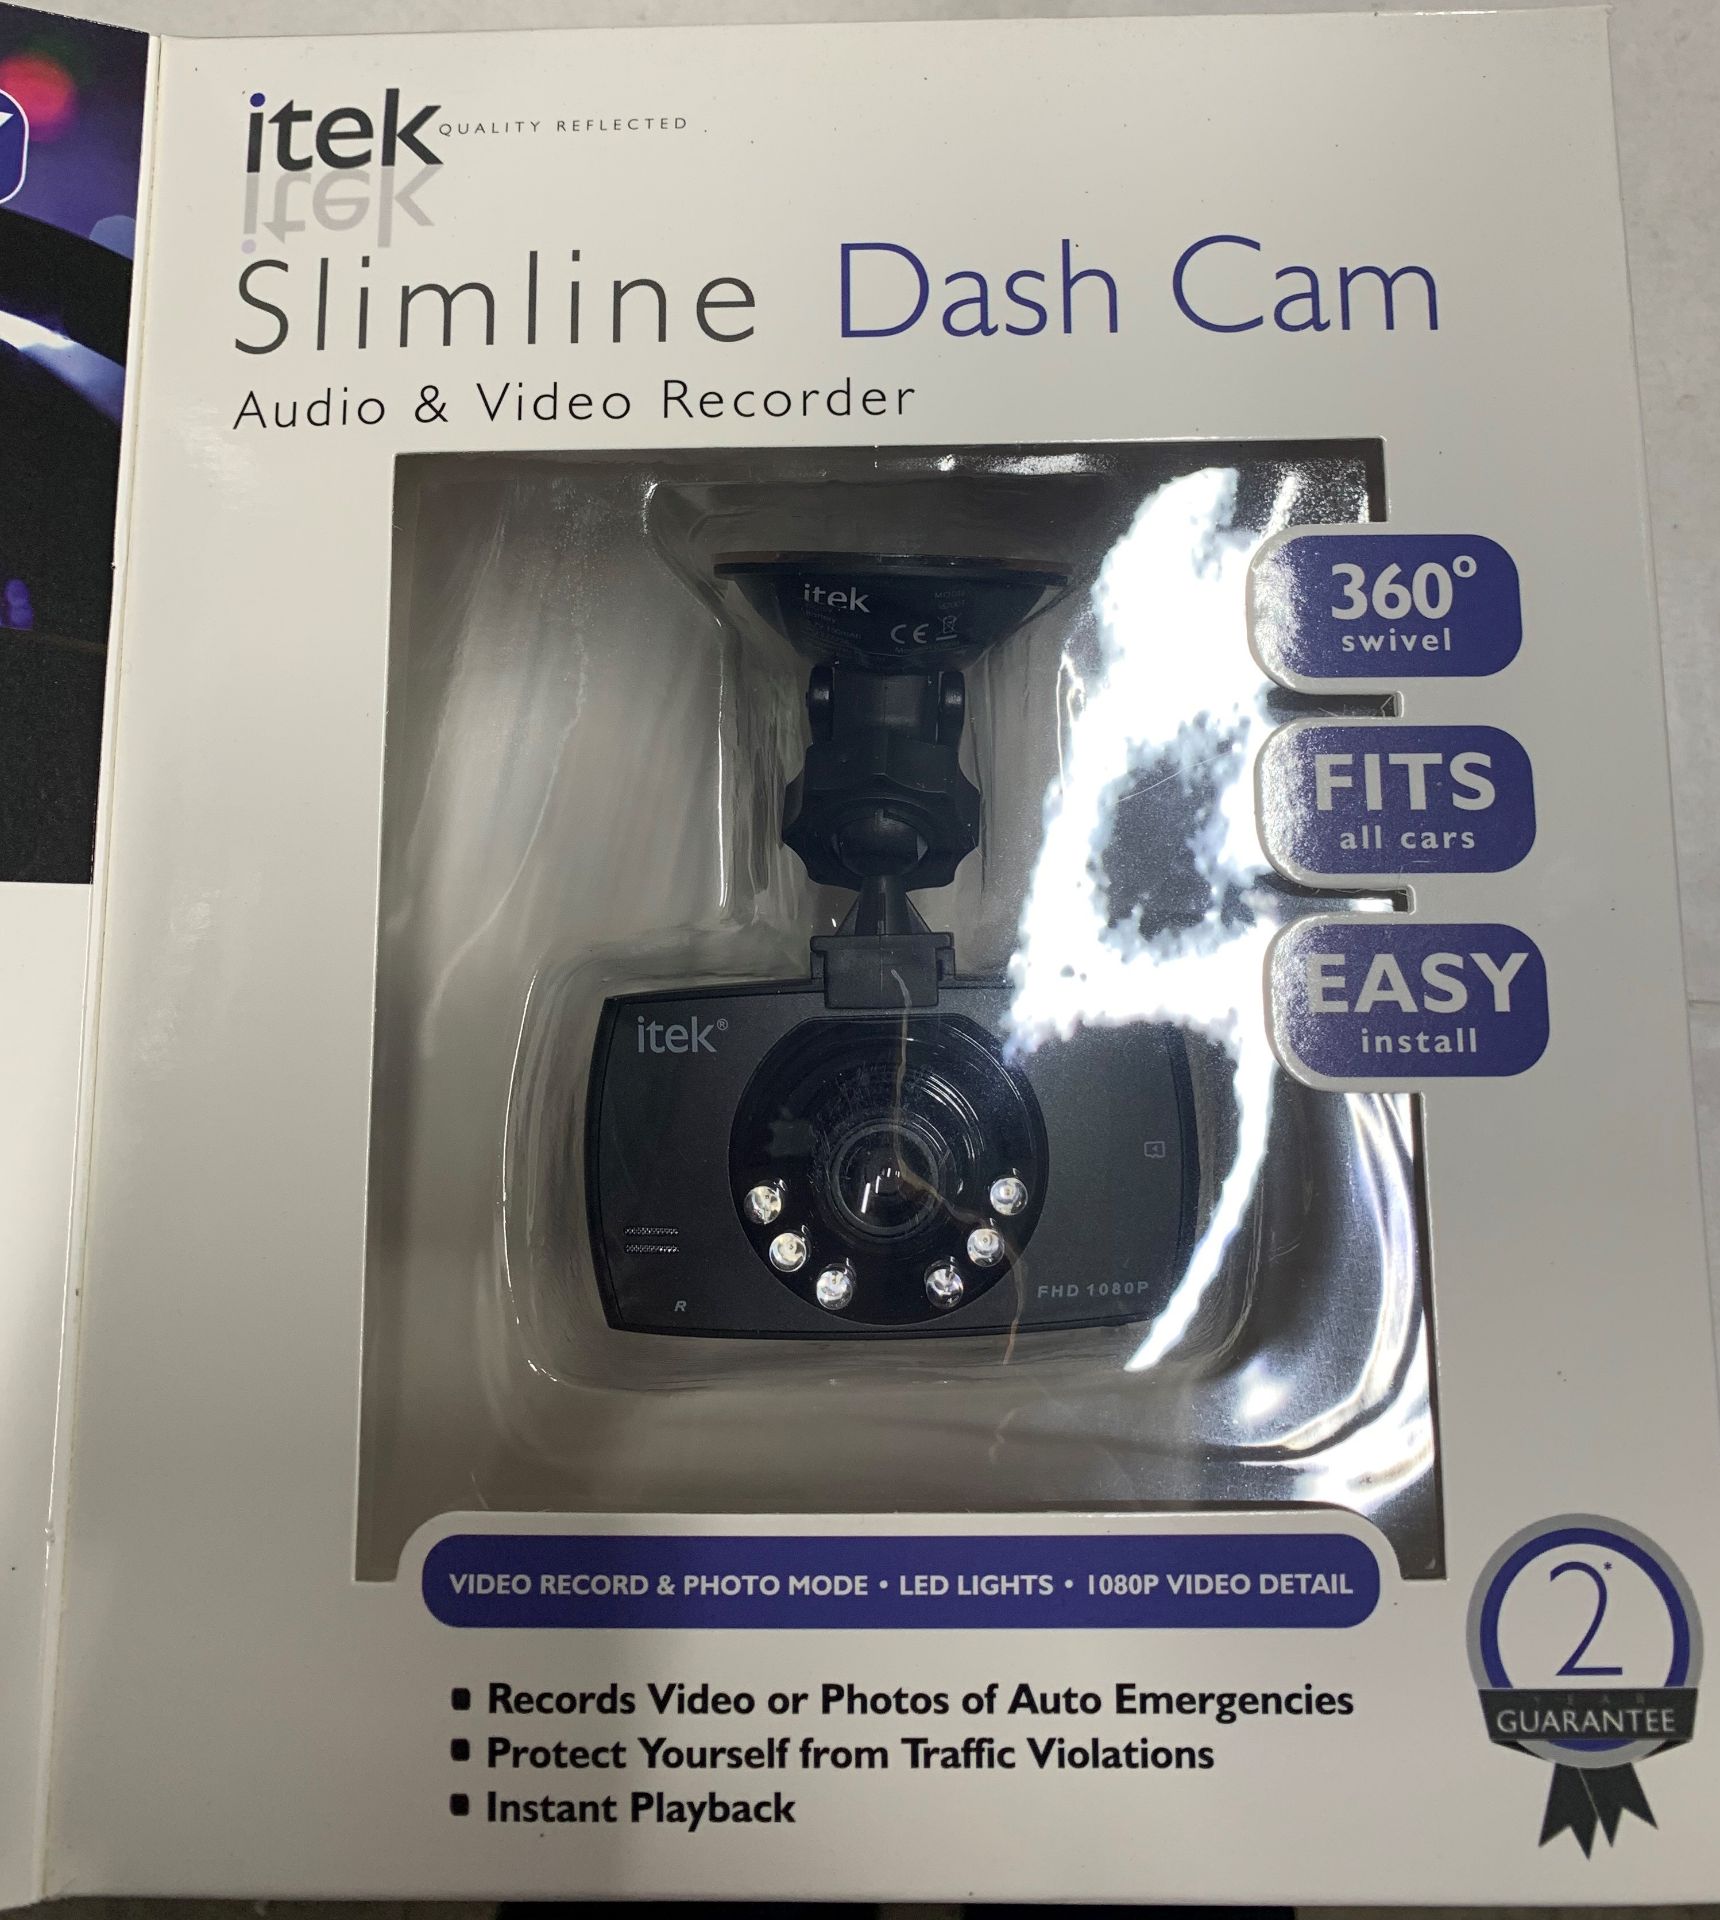 Itek slimline dash cam audio and video recorder